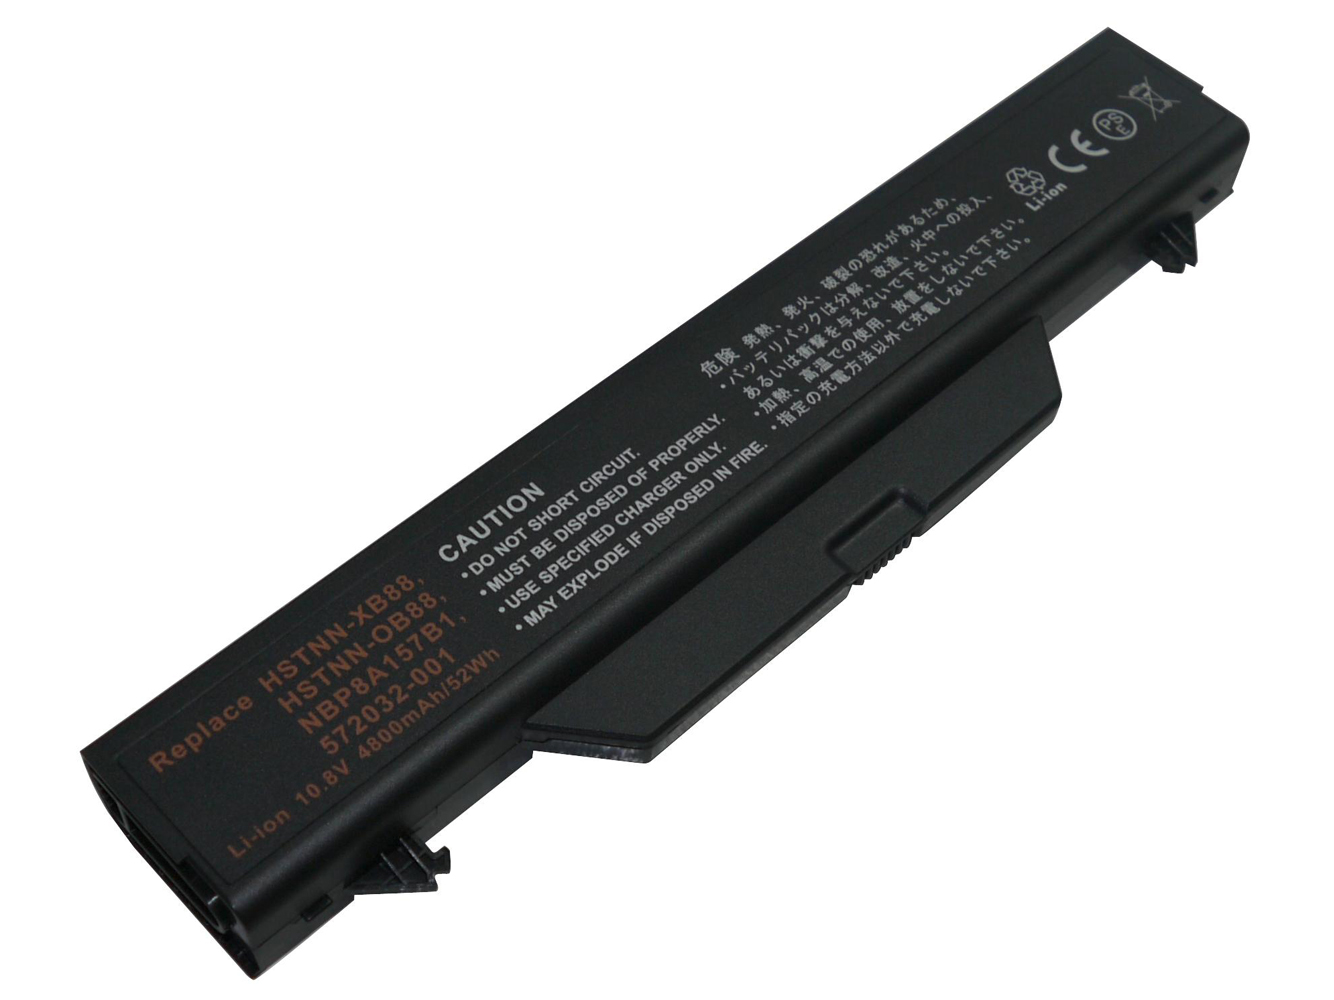 572032-001, HSTNN-OB88 replacement Laptop Battery for HP ProBook 4510s, ProBook 4510s/CT, 6 cells, 4800mAh, 10.80V